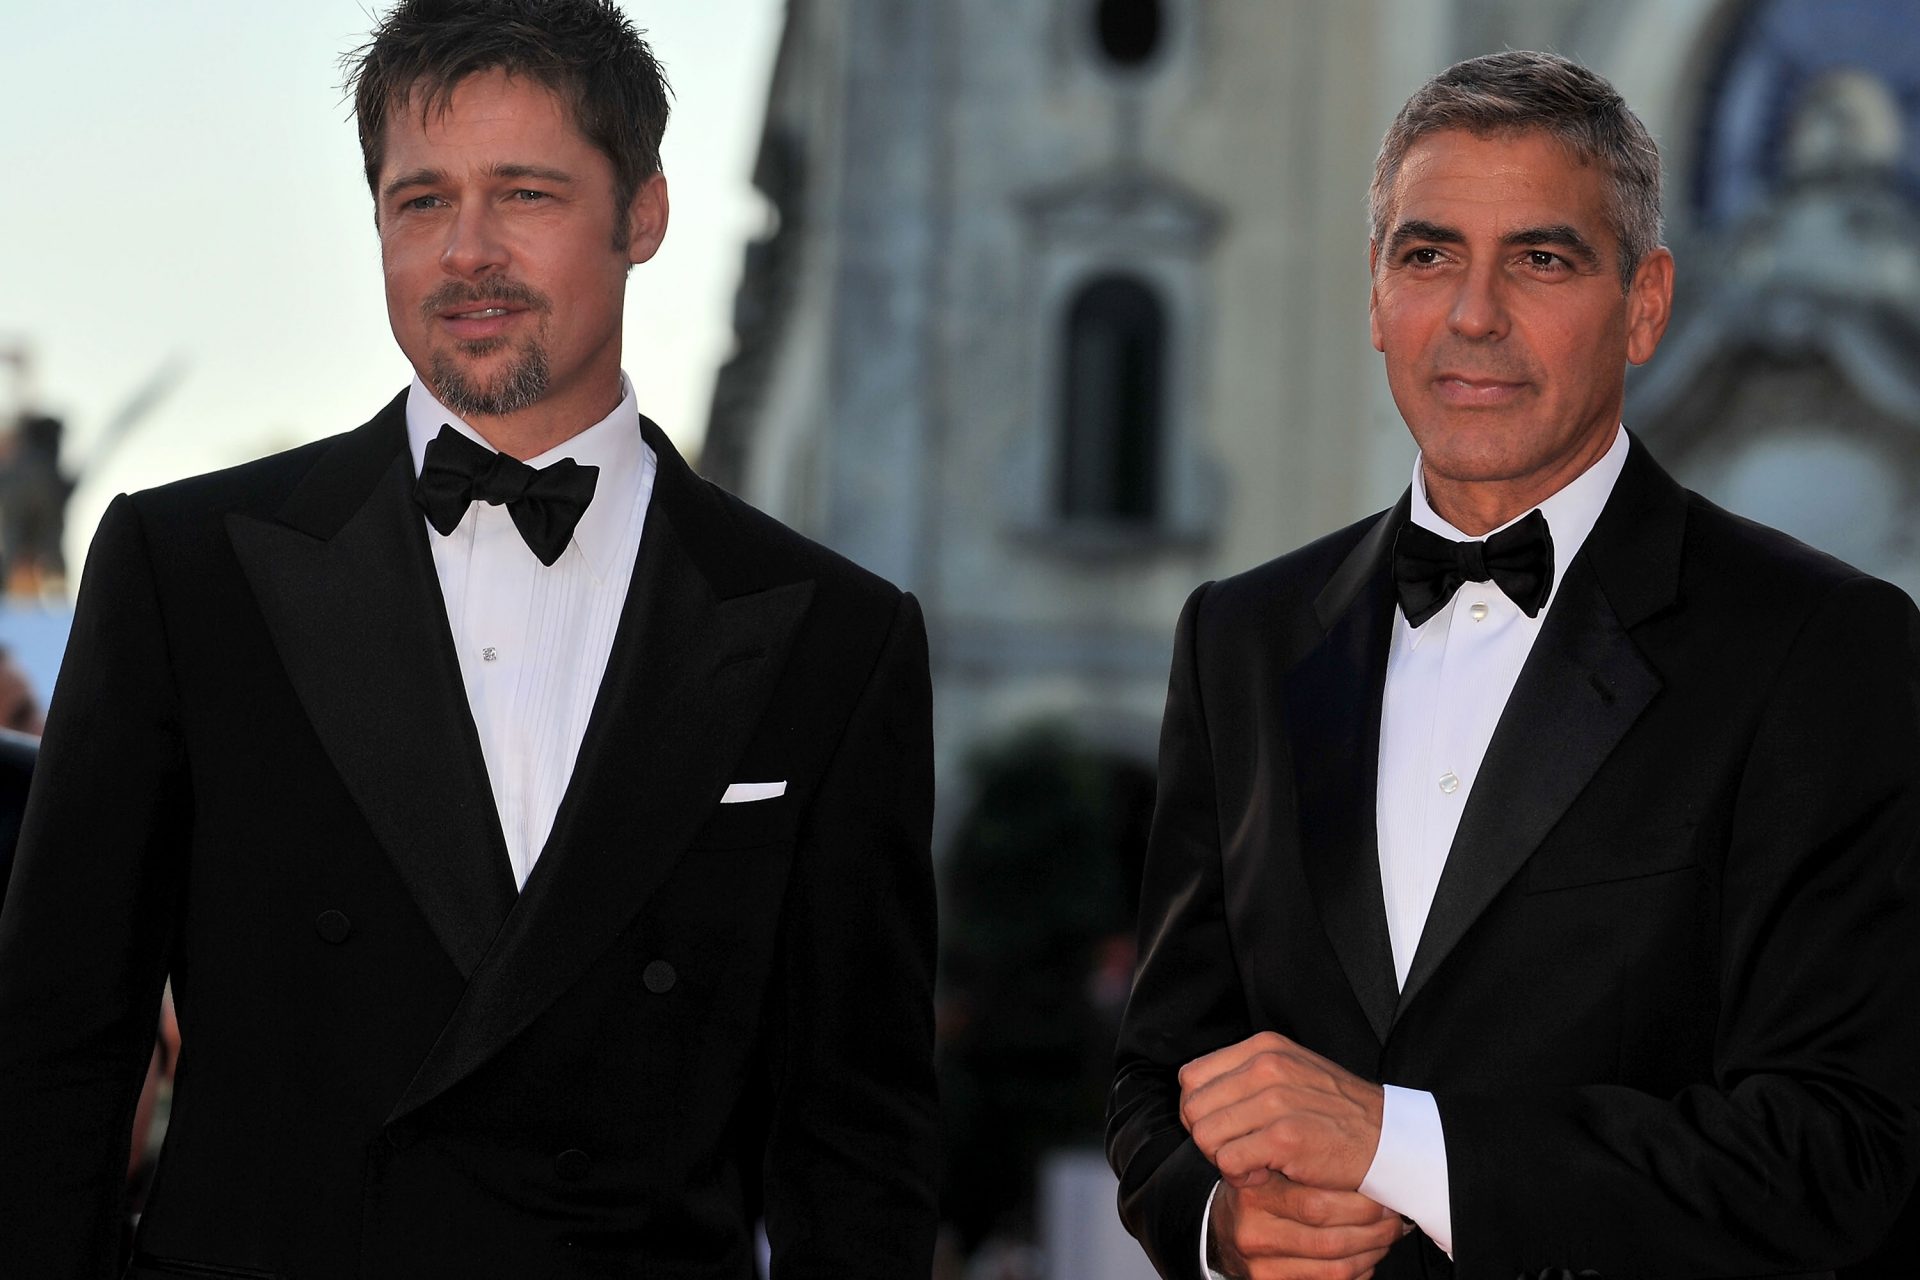 Брэд Питт и Клуни. Джордж Клуни и Брэд Питт. Brad Pitt and George Clooney. Брэд Питт в смокинге. Клуни питт